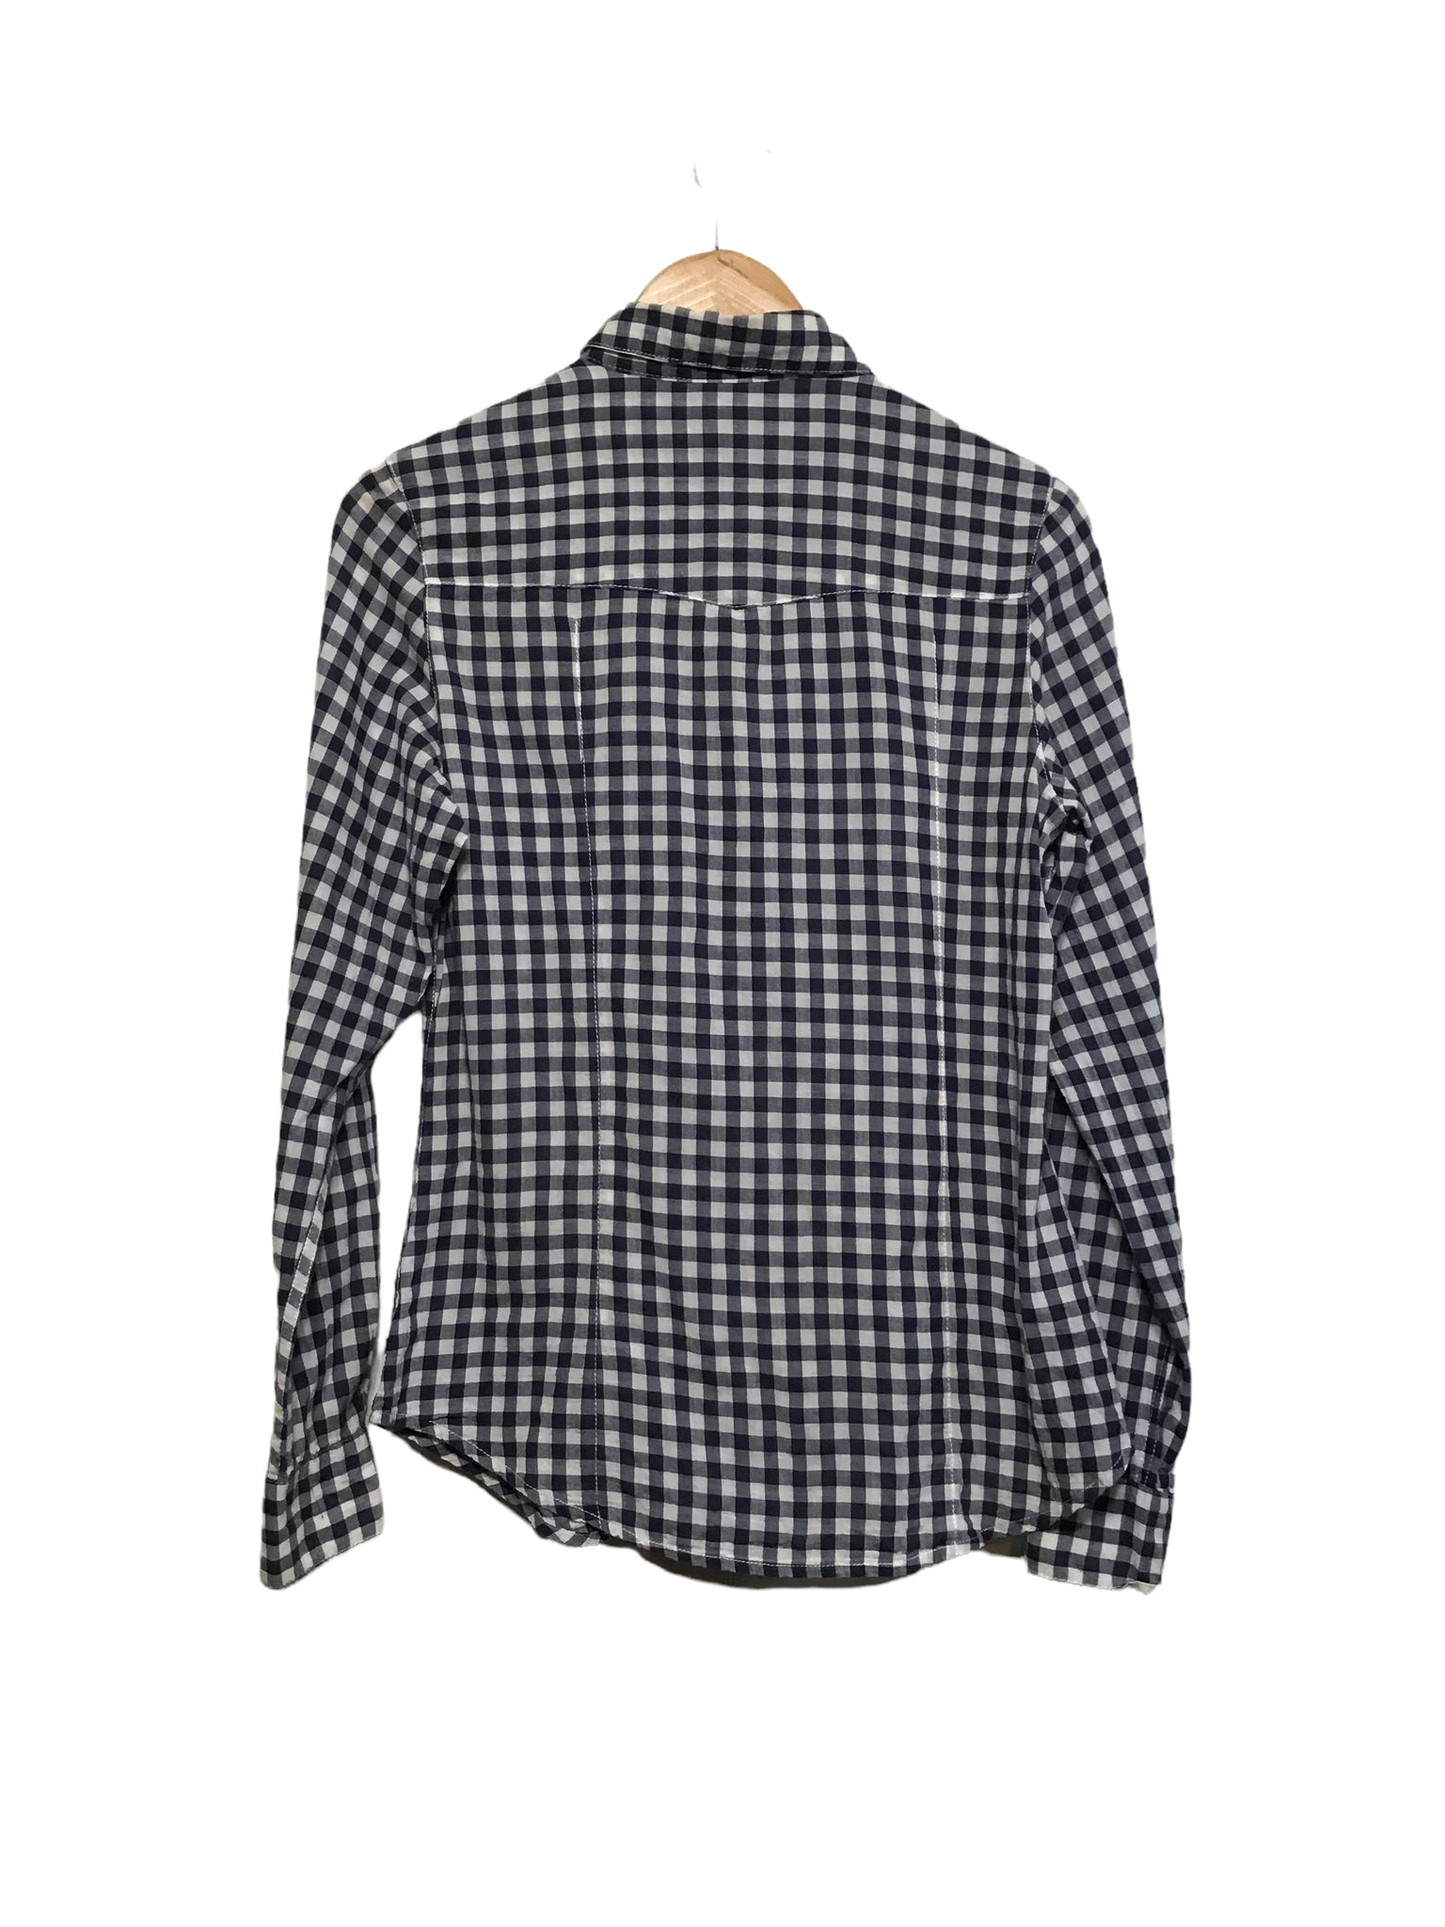 Gap Navy Checkered Shirt (Size M)